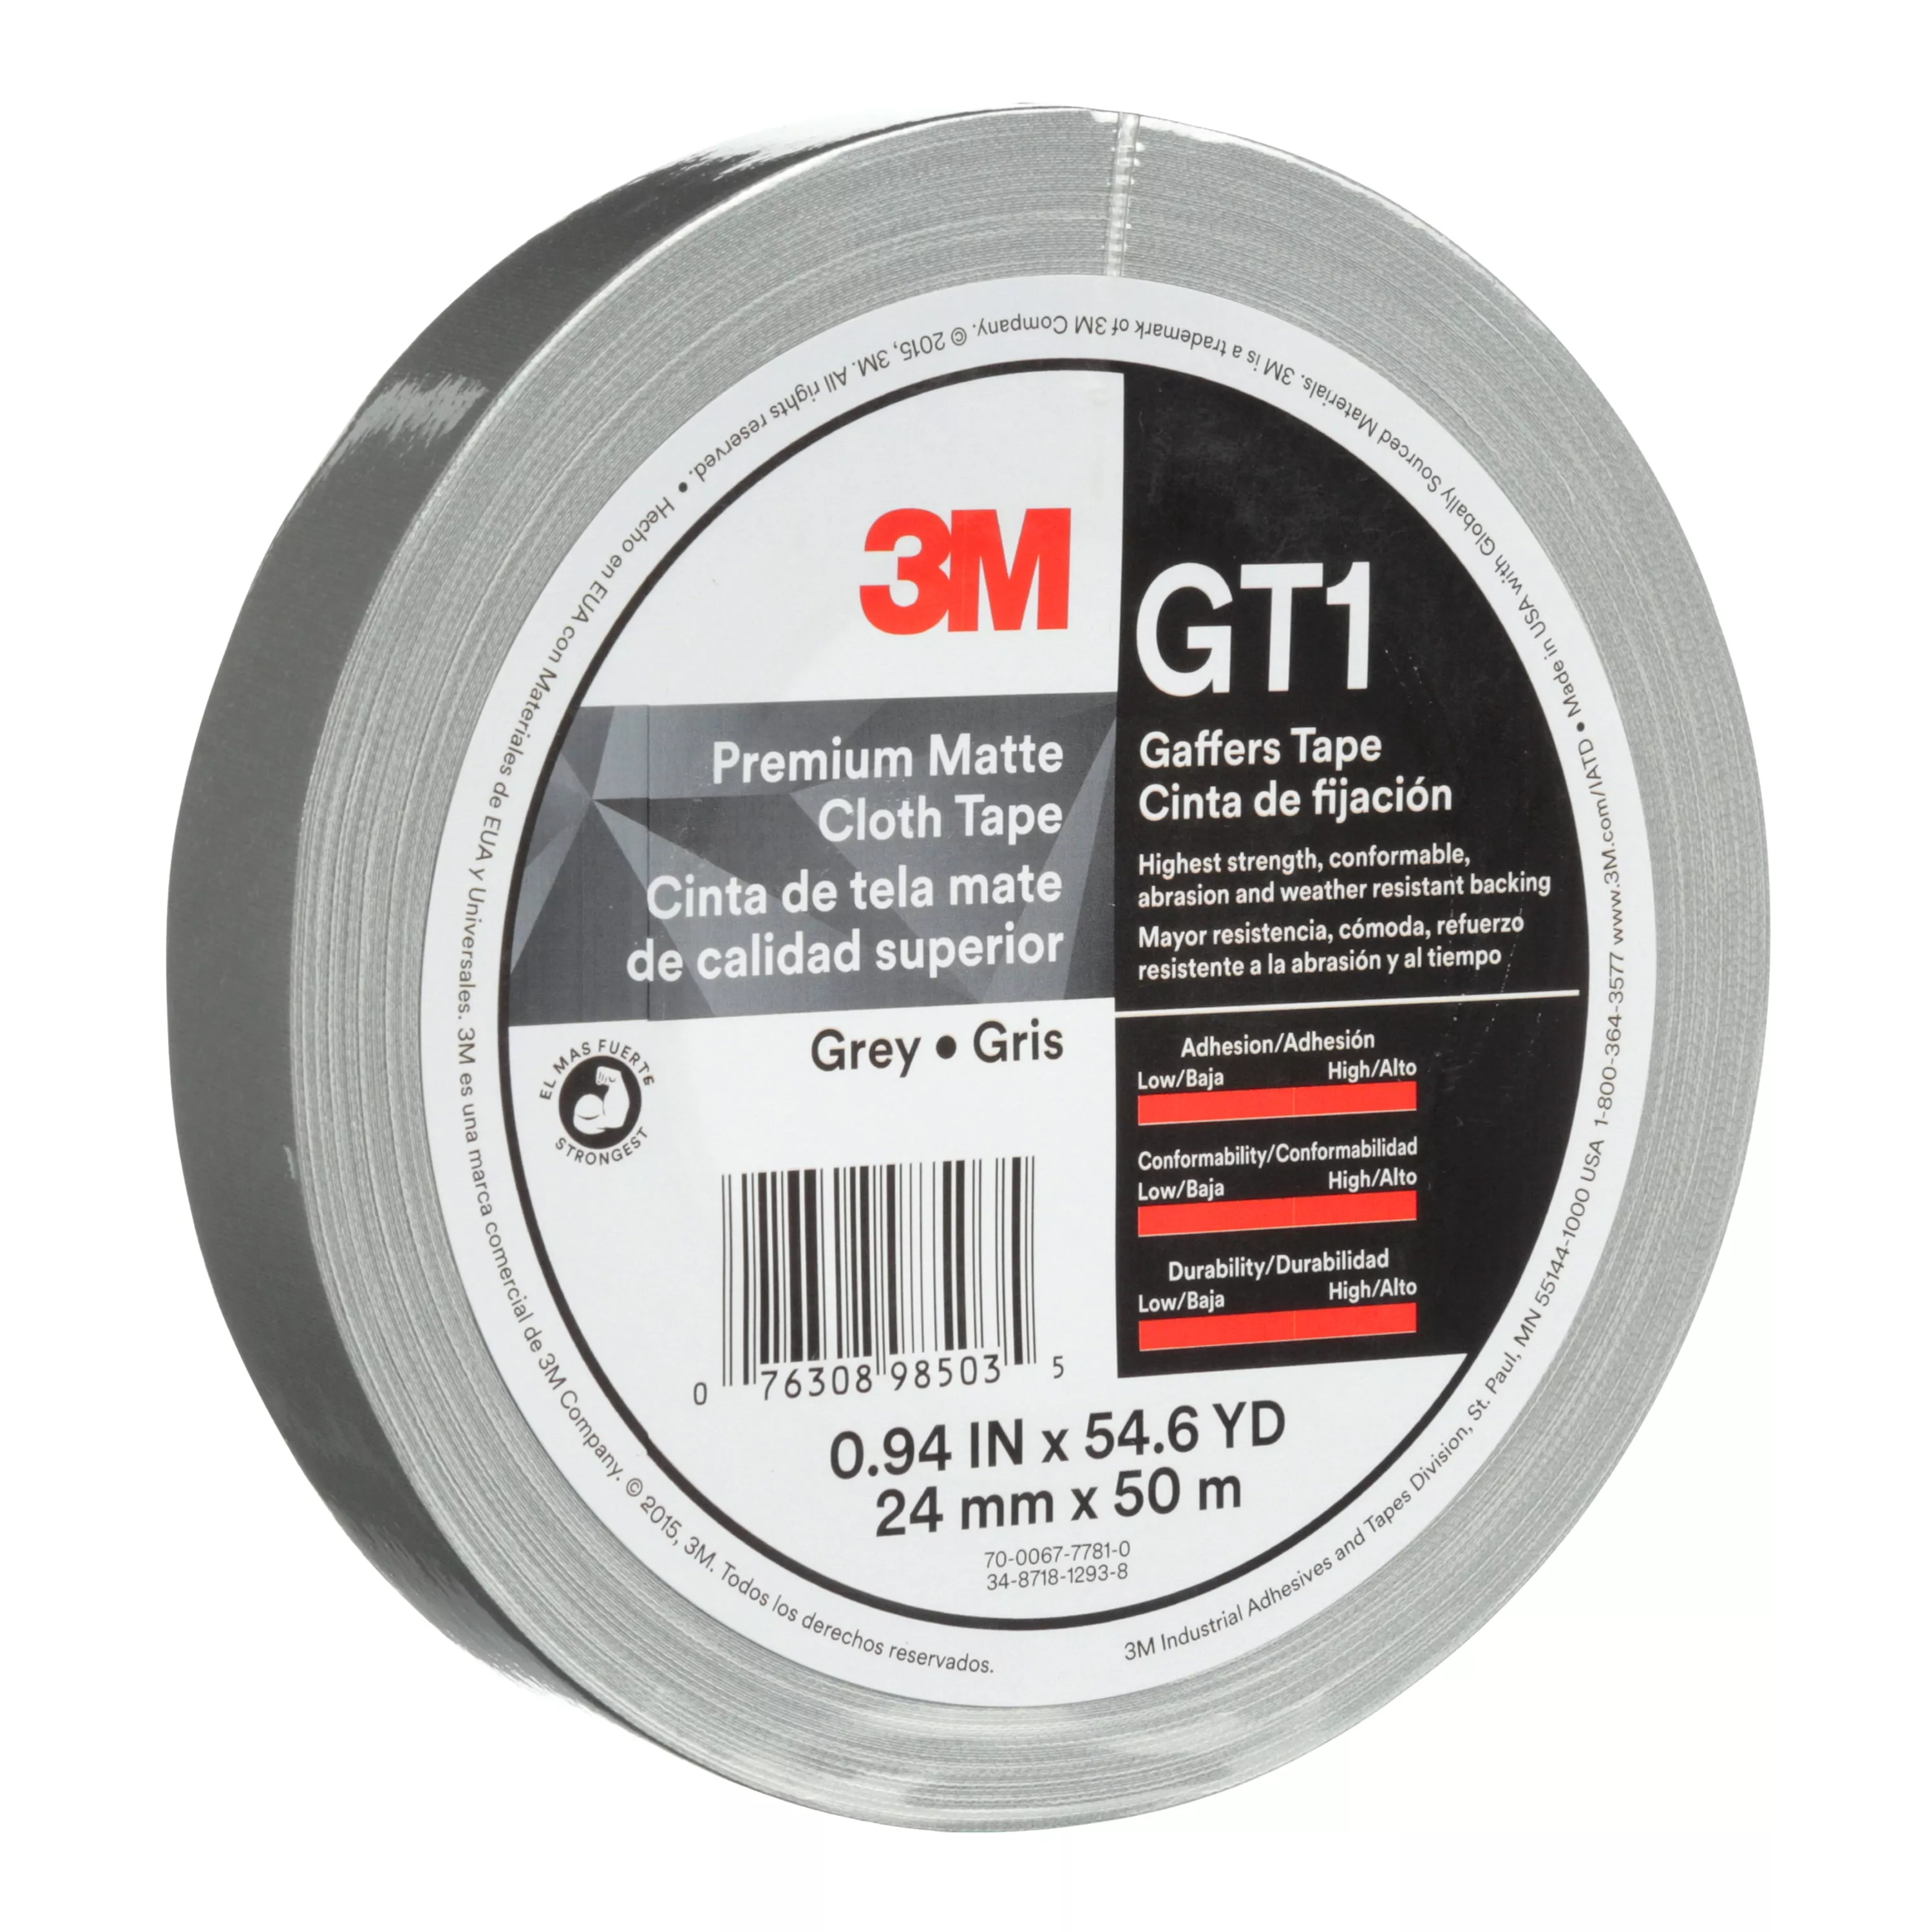 3M™ Premium Matte Cloth (Gaffers) Tape GT1, Gray, 24 mm x 50 m, 11 mil,
48/Case